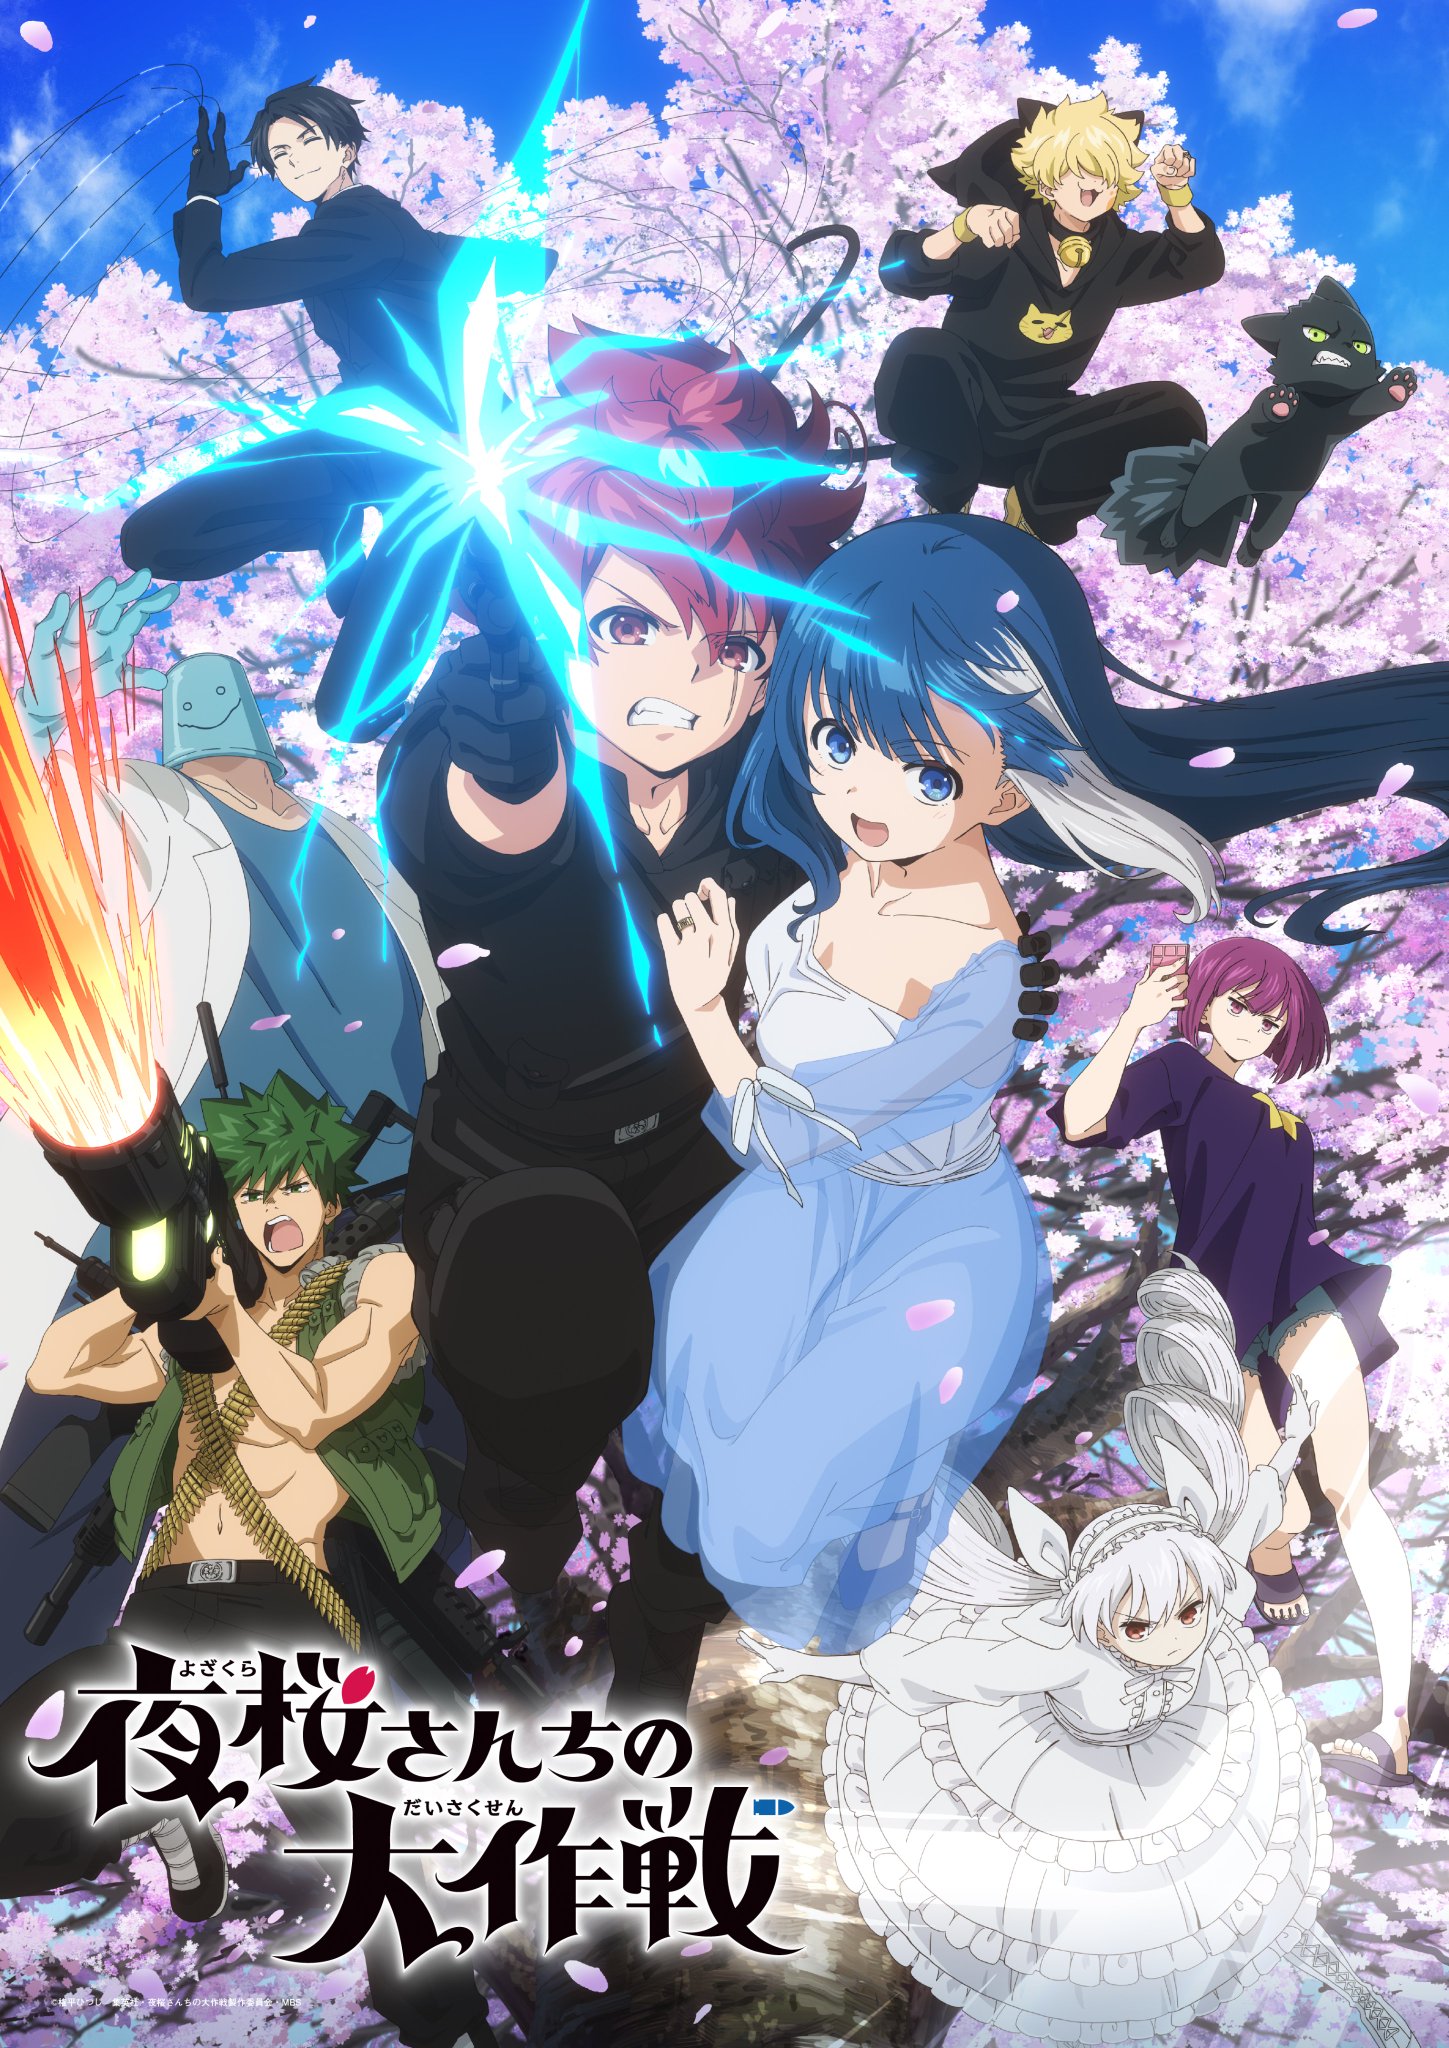 Shueisha enthüllt ein chaotisches neues Visual für das Anime-Cover „Mission: Yozakura Family“.